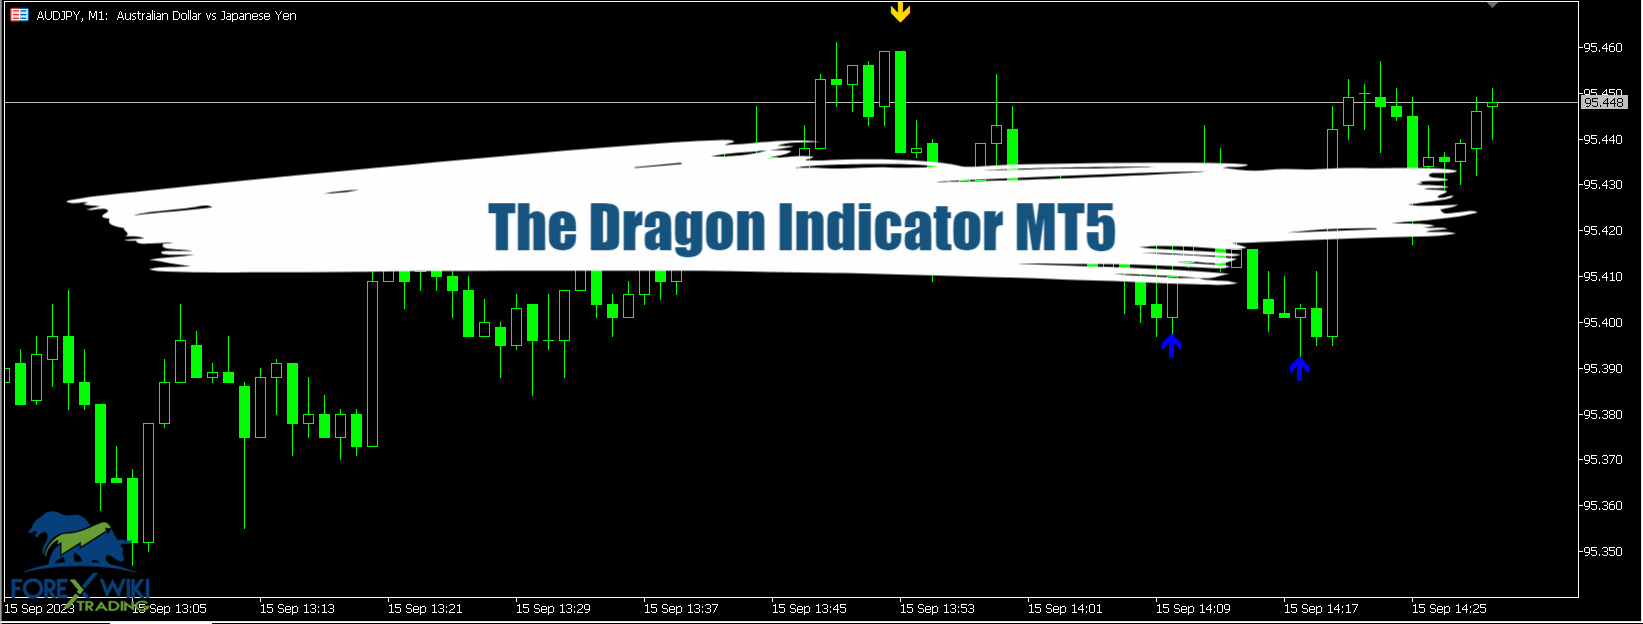 The Dragon Indicator MT5 - Free Download 49